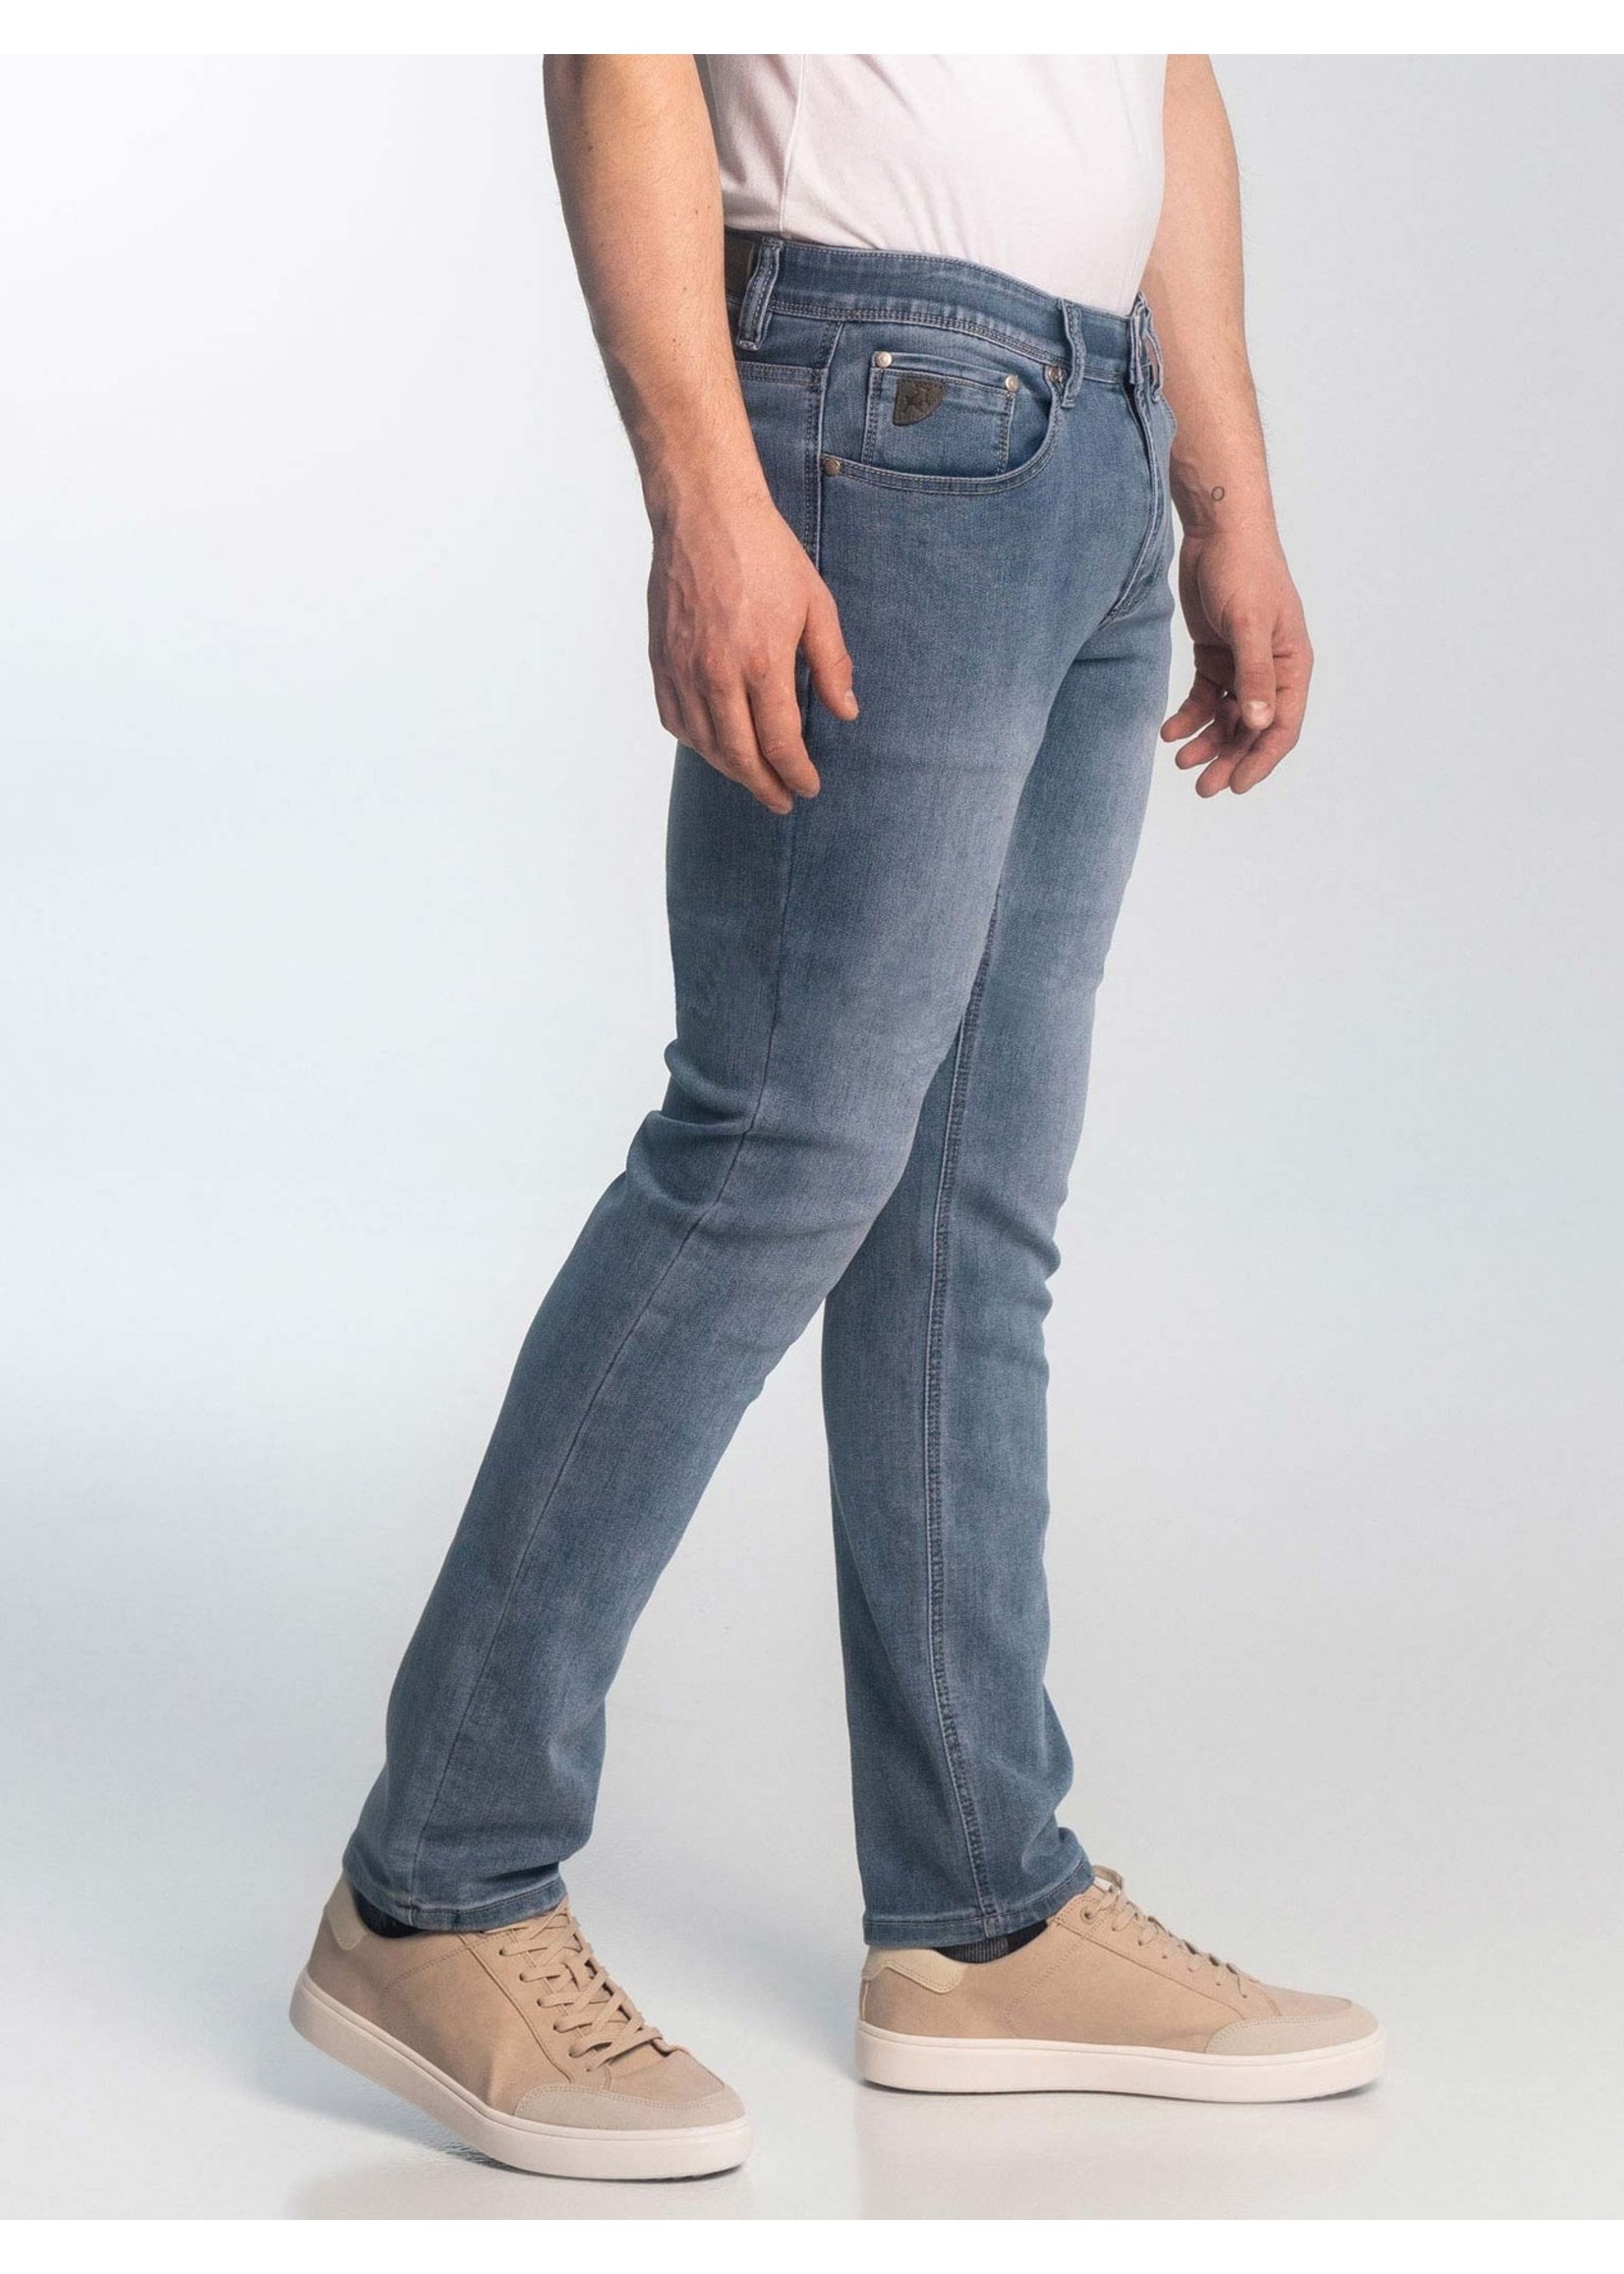 LOIS JEANS & JACKETS Jeans super extensible coupe Peter slim-Homme